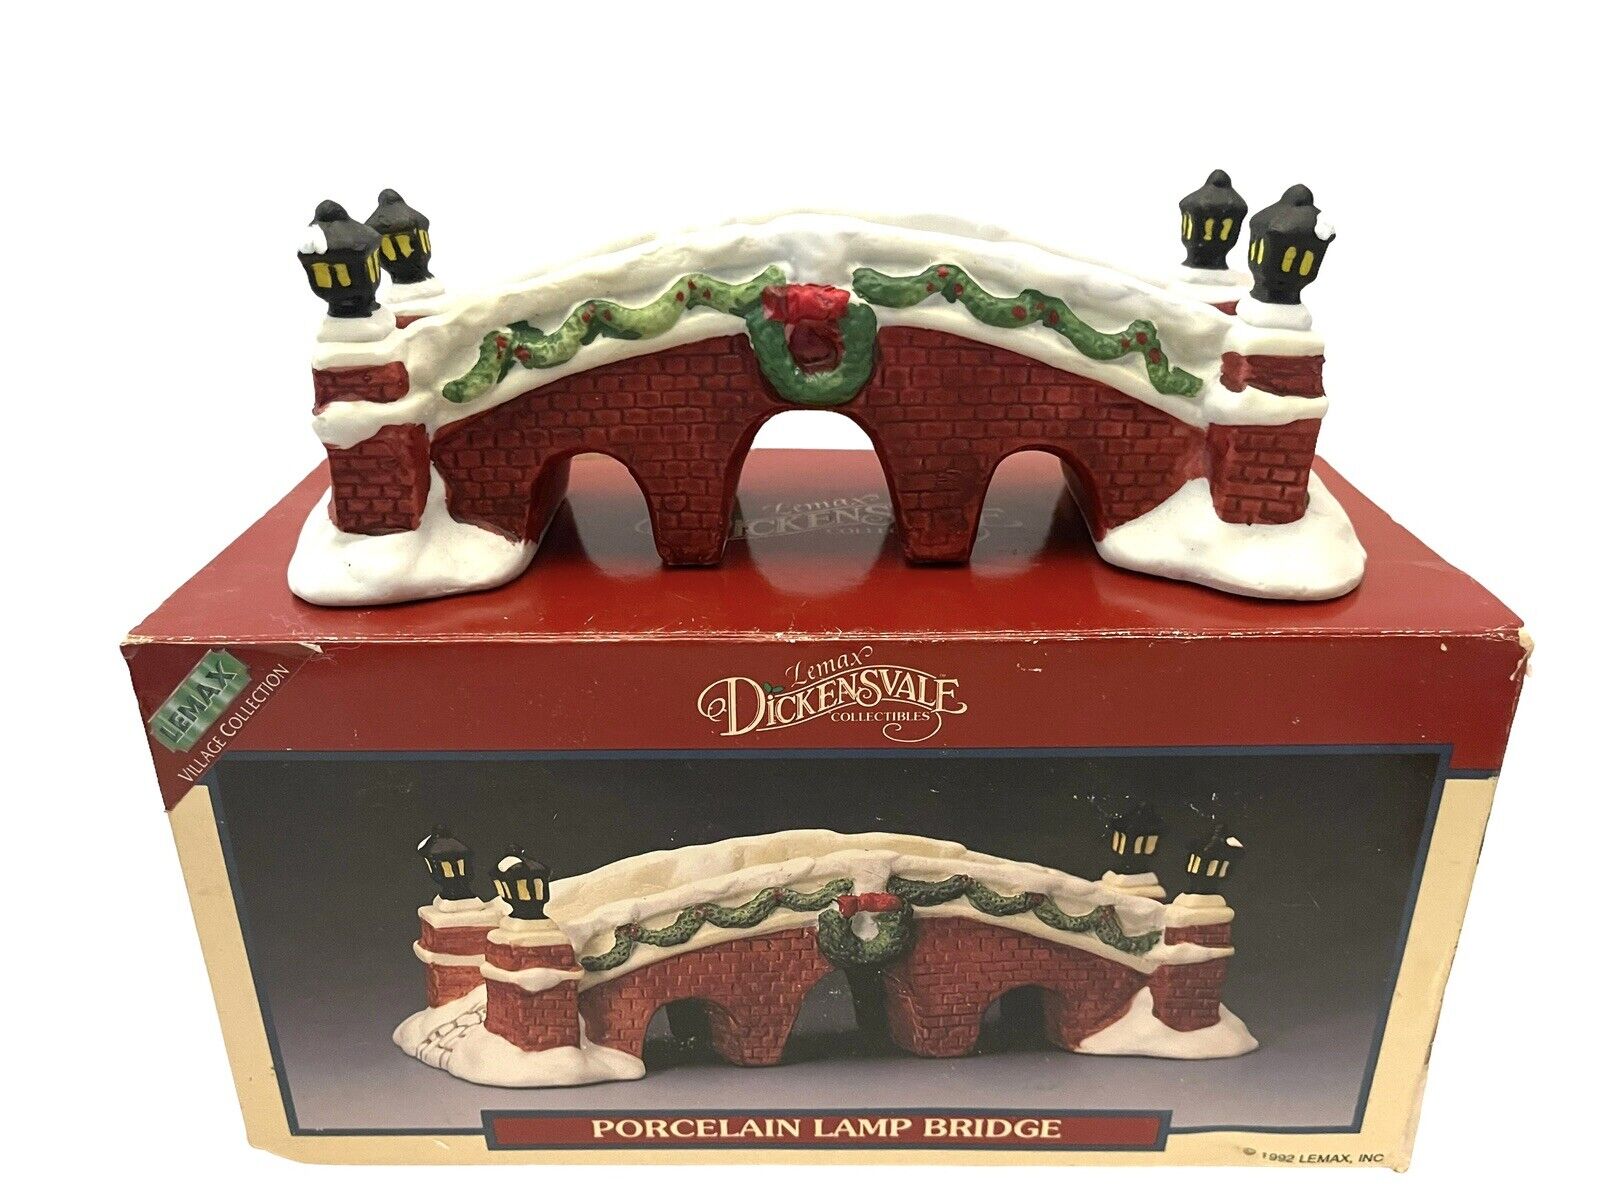 LEMAX Dickensvale Porcelain Lamp Bridge 3”x8” Christmas Village Figurine 1995